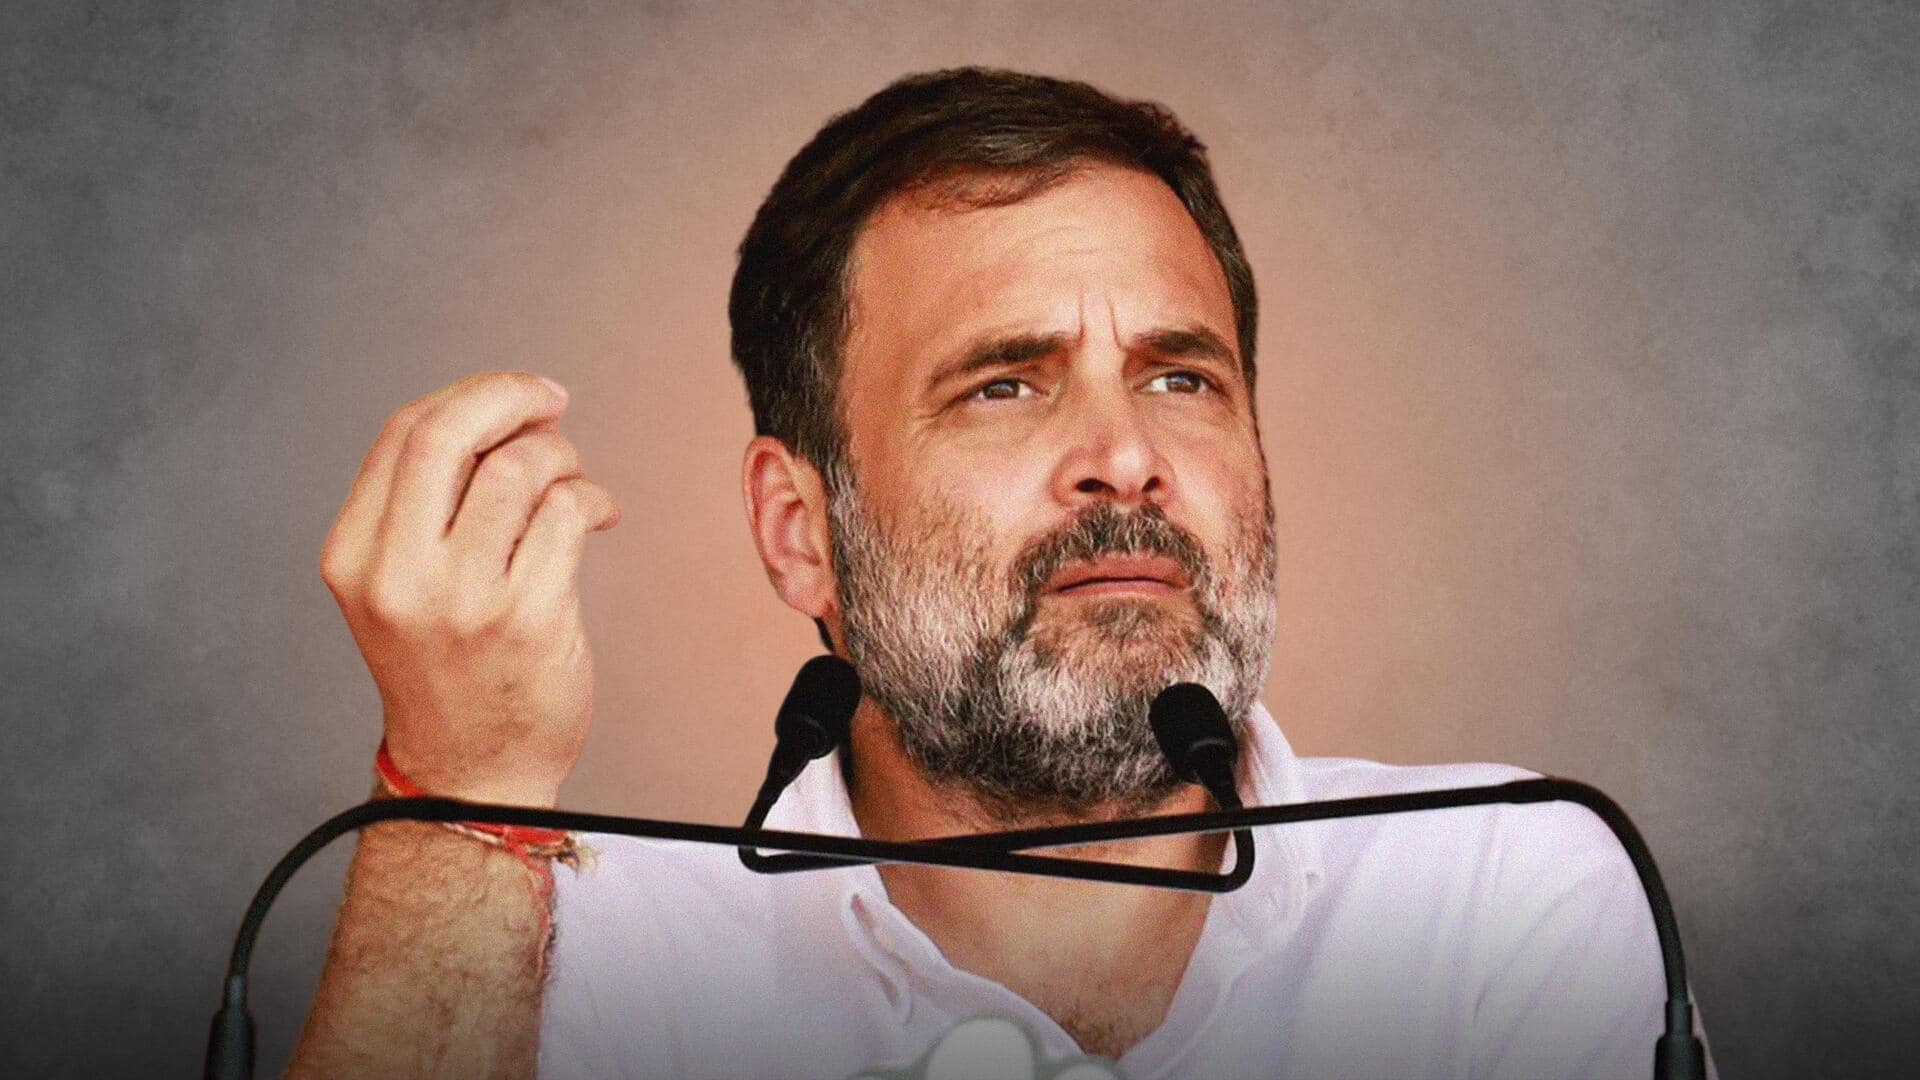 Rahul Gandhi to skip INDIA bloc's rally due to illness